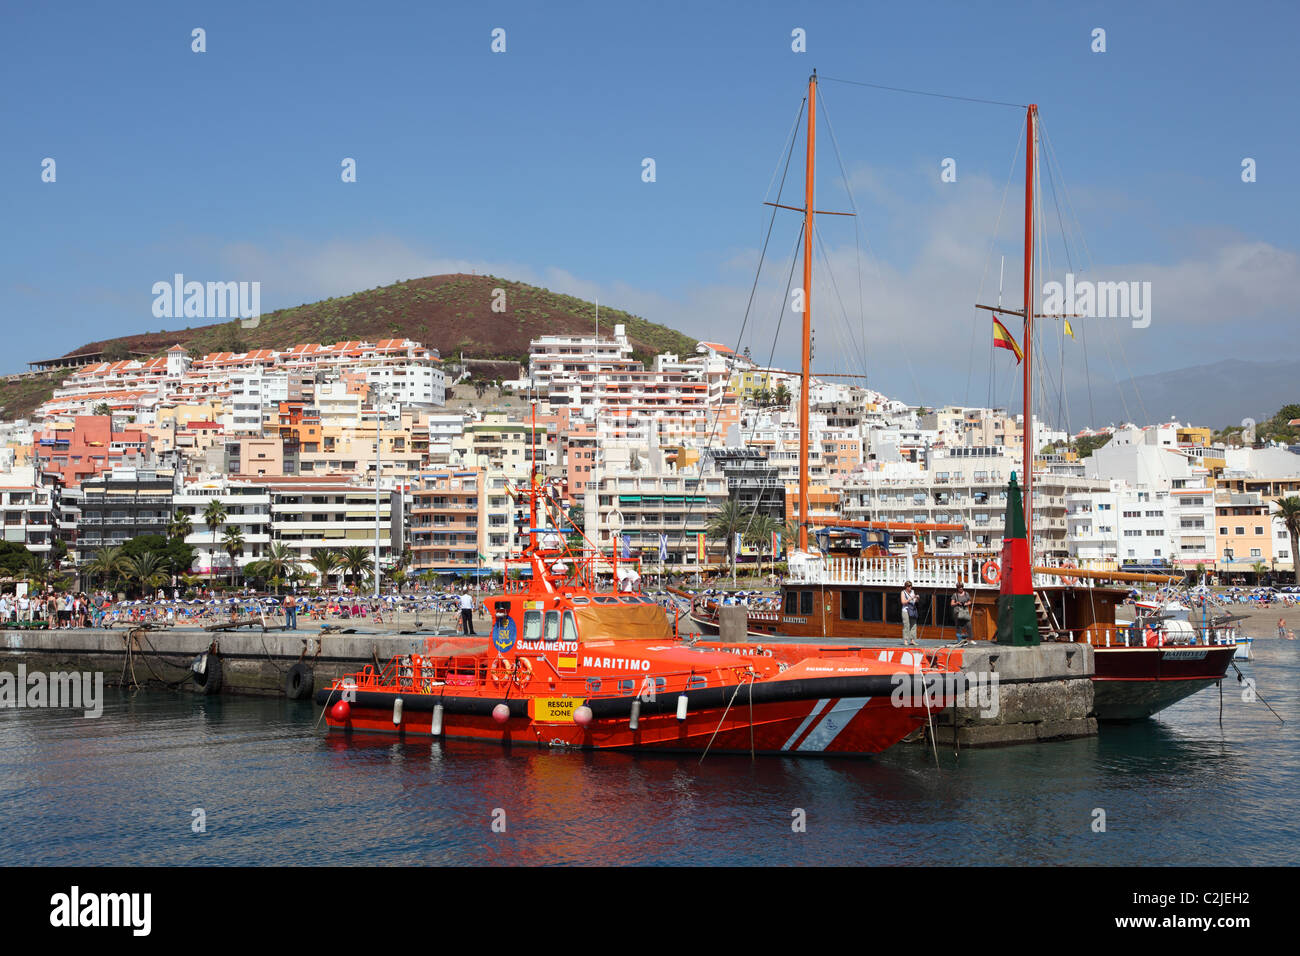 Salvamento Maritimo boat in the harbor of Los Cristianos, Canary Island Tenerife, Spain. Stock Photo